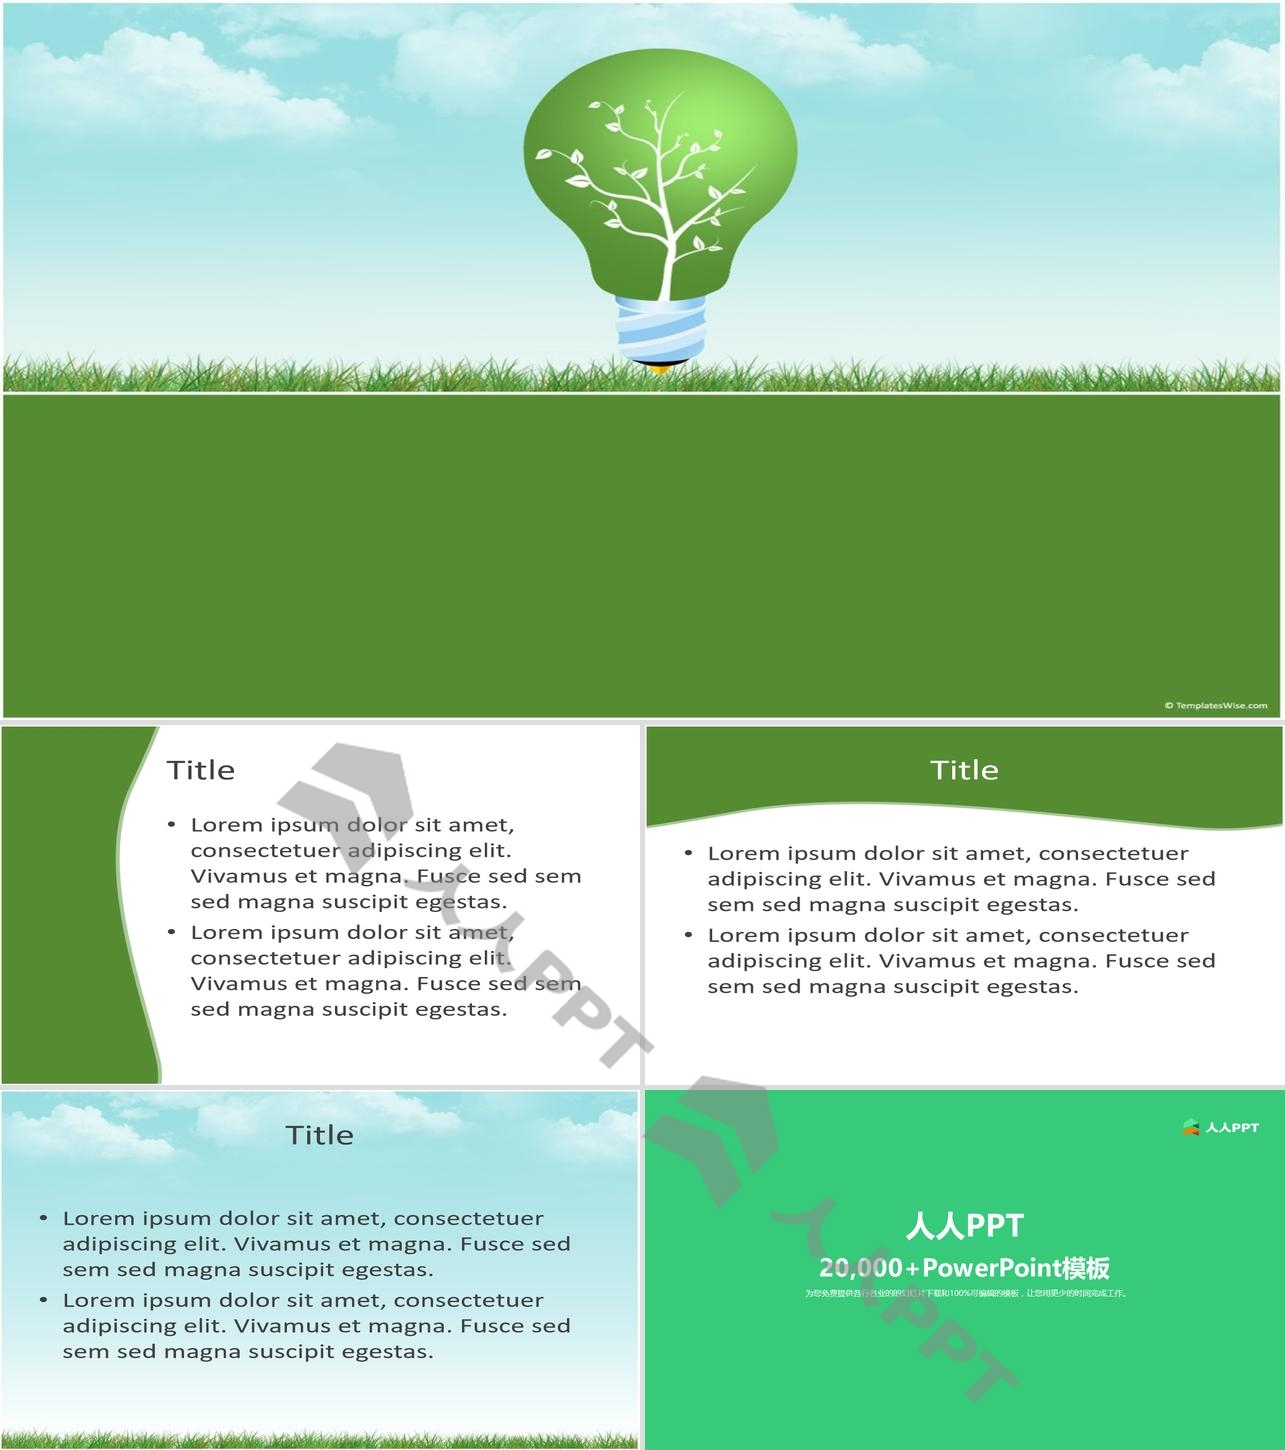 绿色低碳环保PPT模板长图